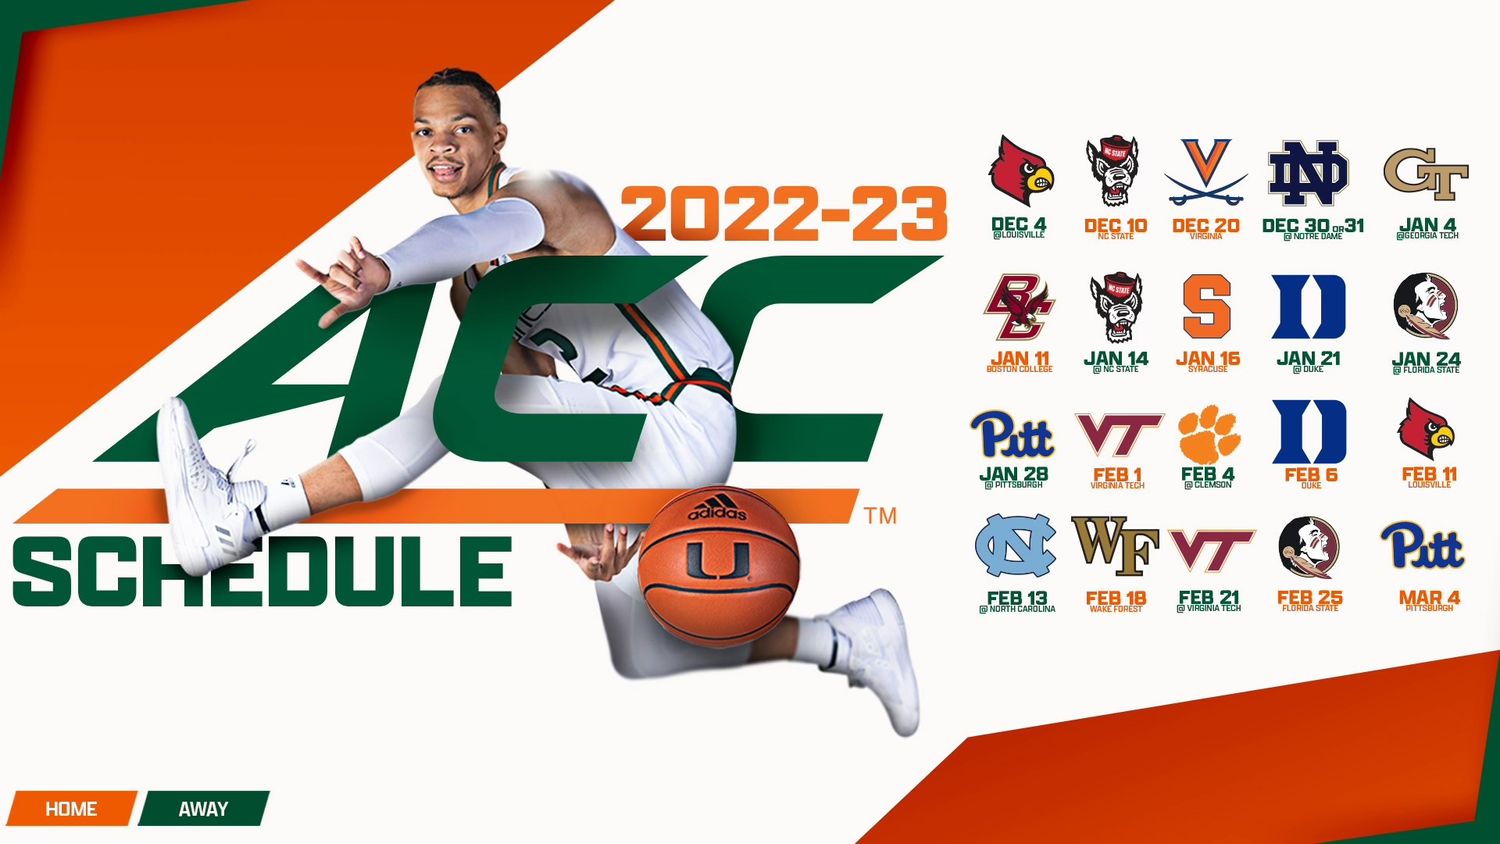 ACC announces 2022-23 men's basketball schedule - The Miami Hurricane